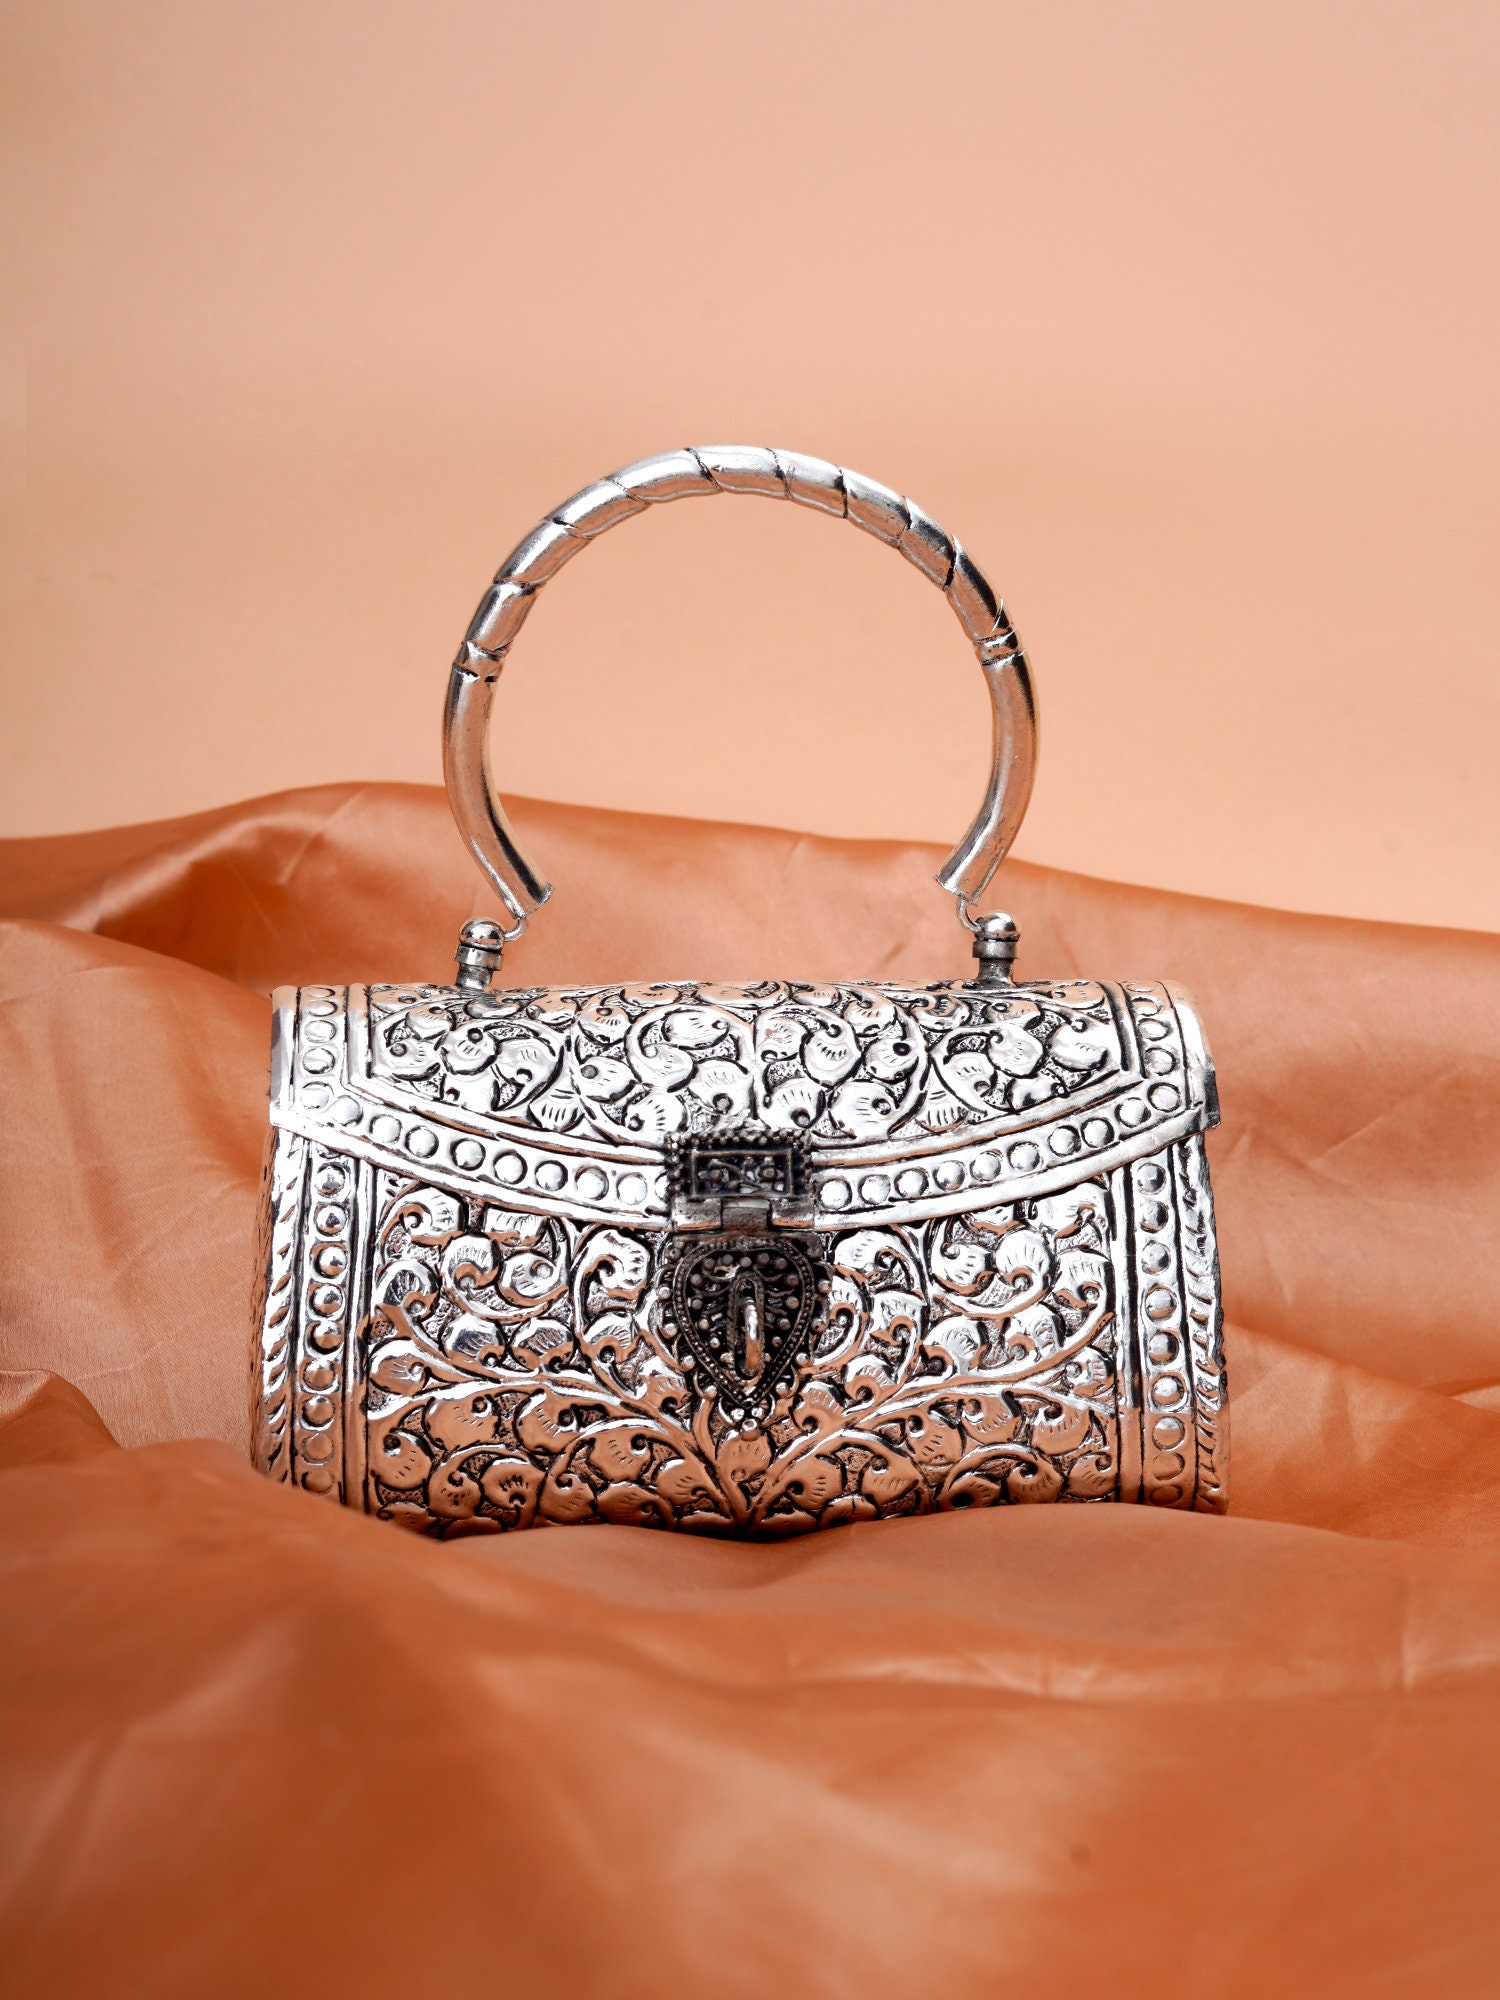 Silverwala 925-92.5 Sterling Silver Purse Fashion Drop Earring for Women  and Girls : Silverwala: Amazon.in: Fashion